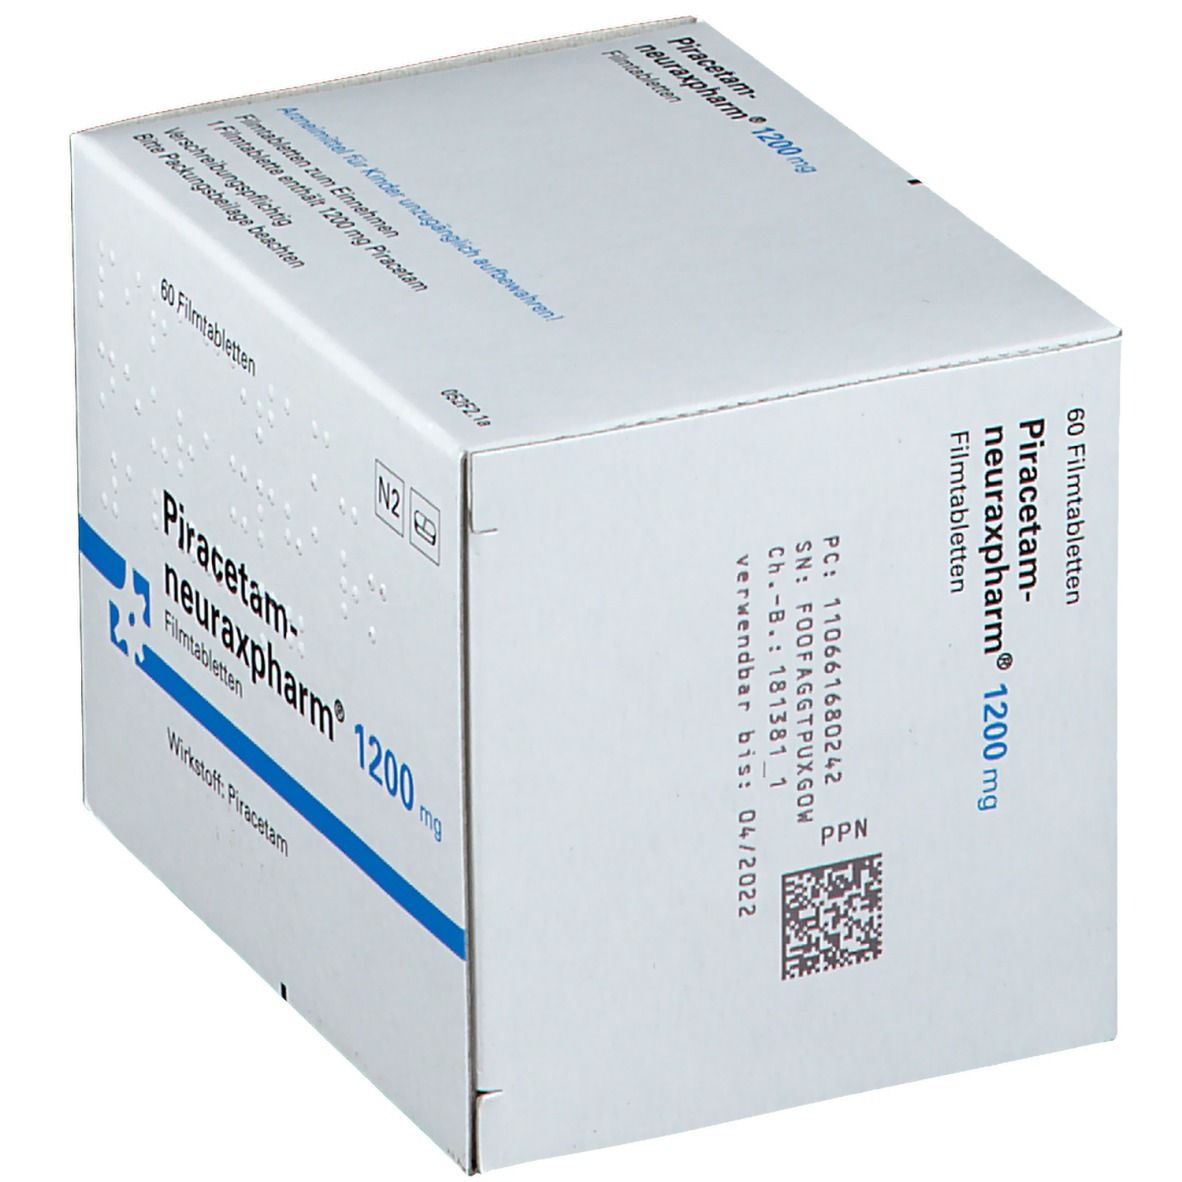 Piracetam-neuraxpharm® 1200 mg